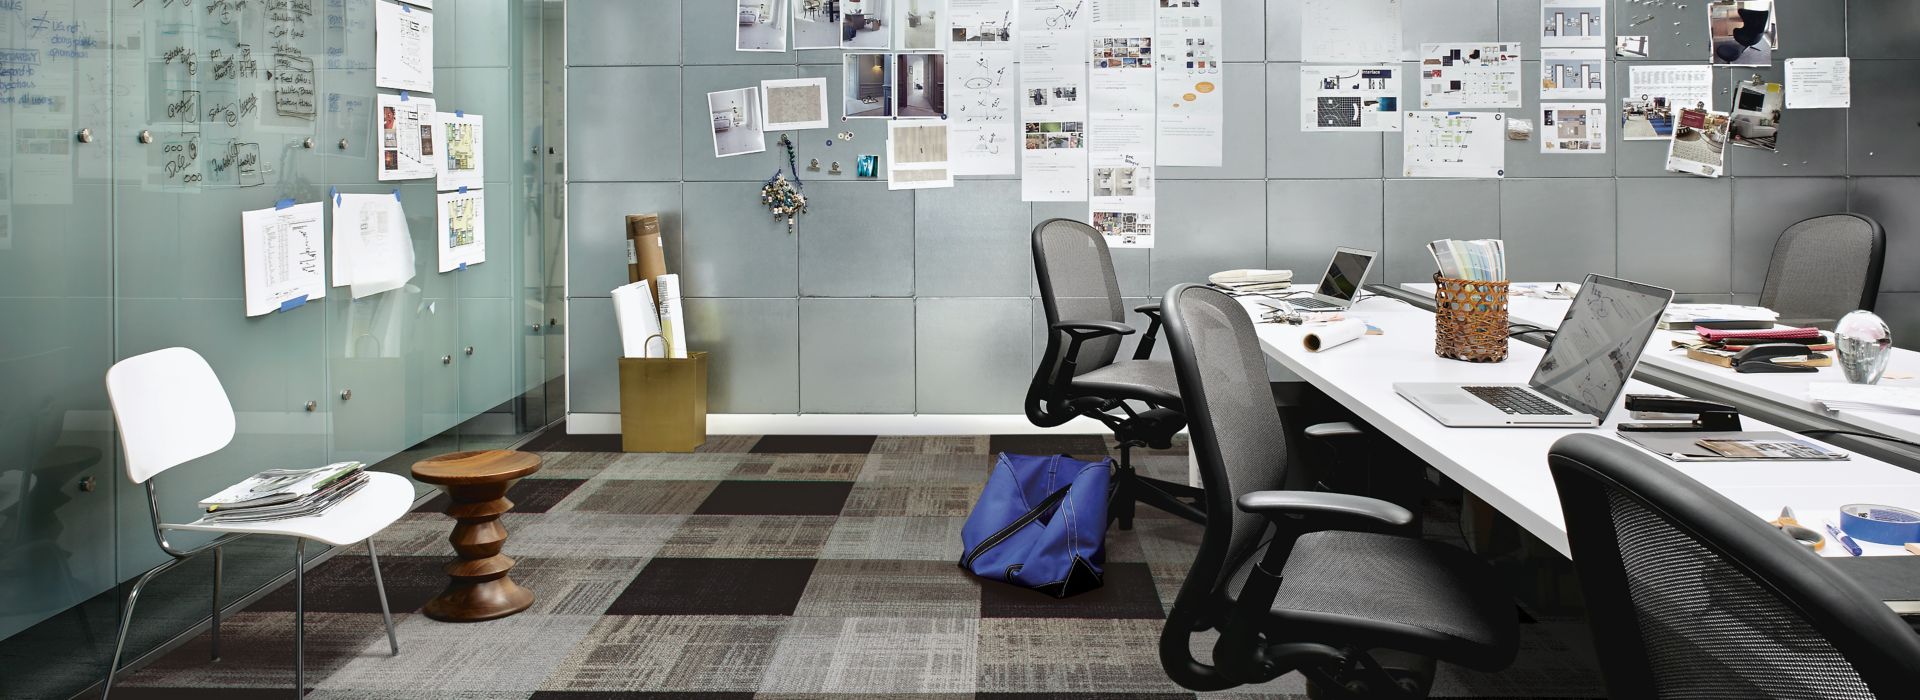 Interface AE310 carpet tile in meeting room